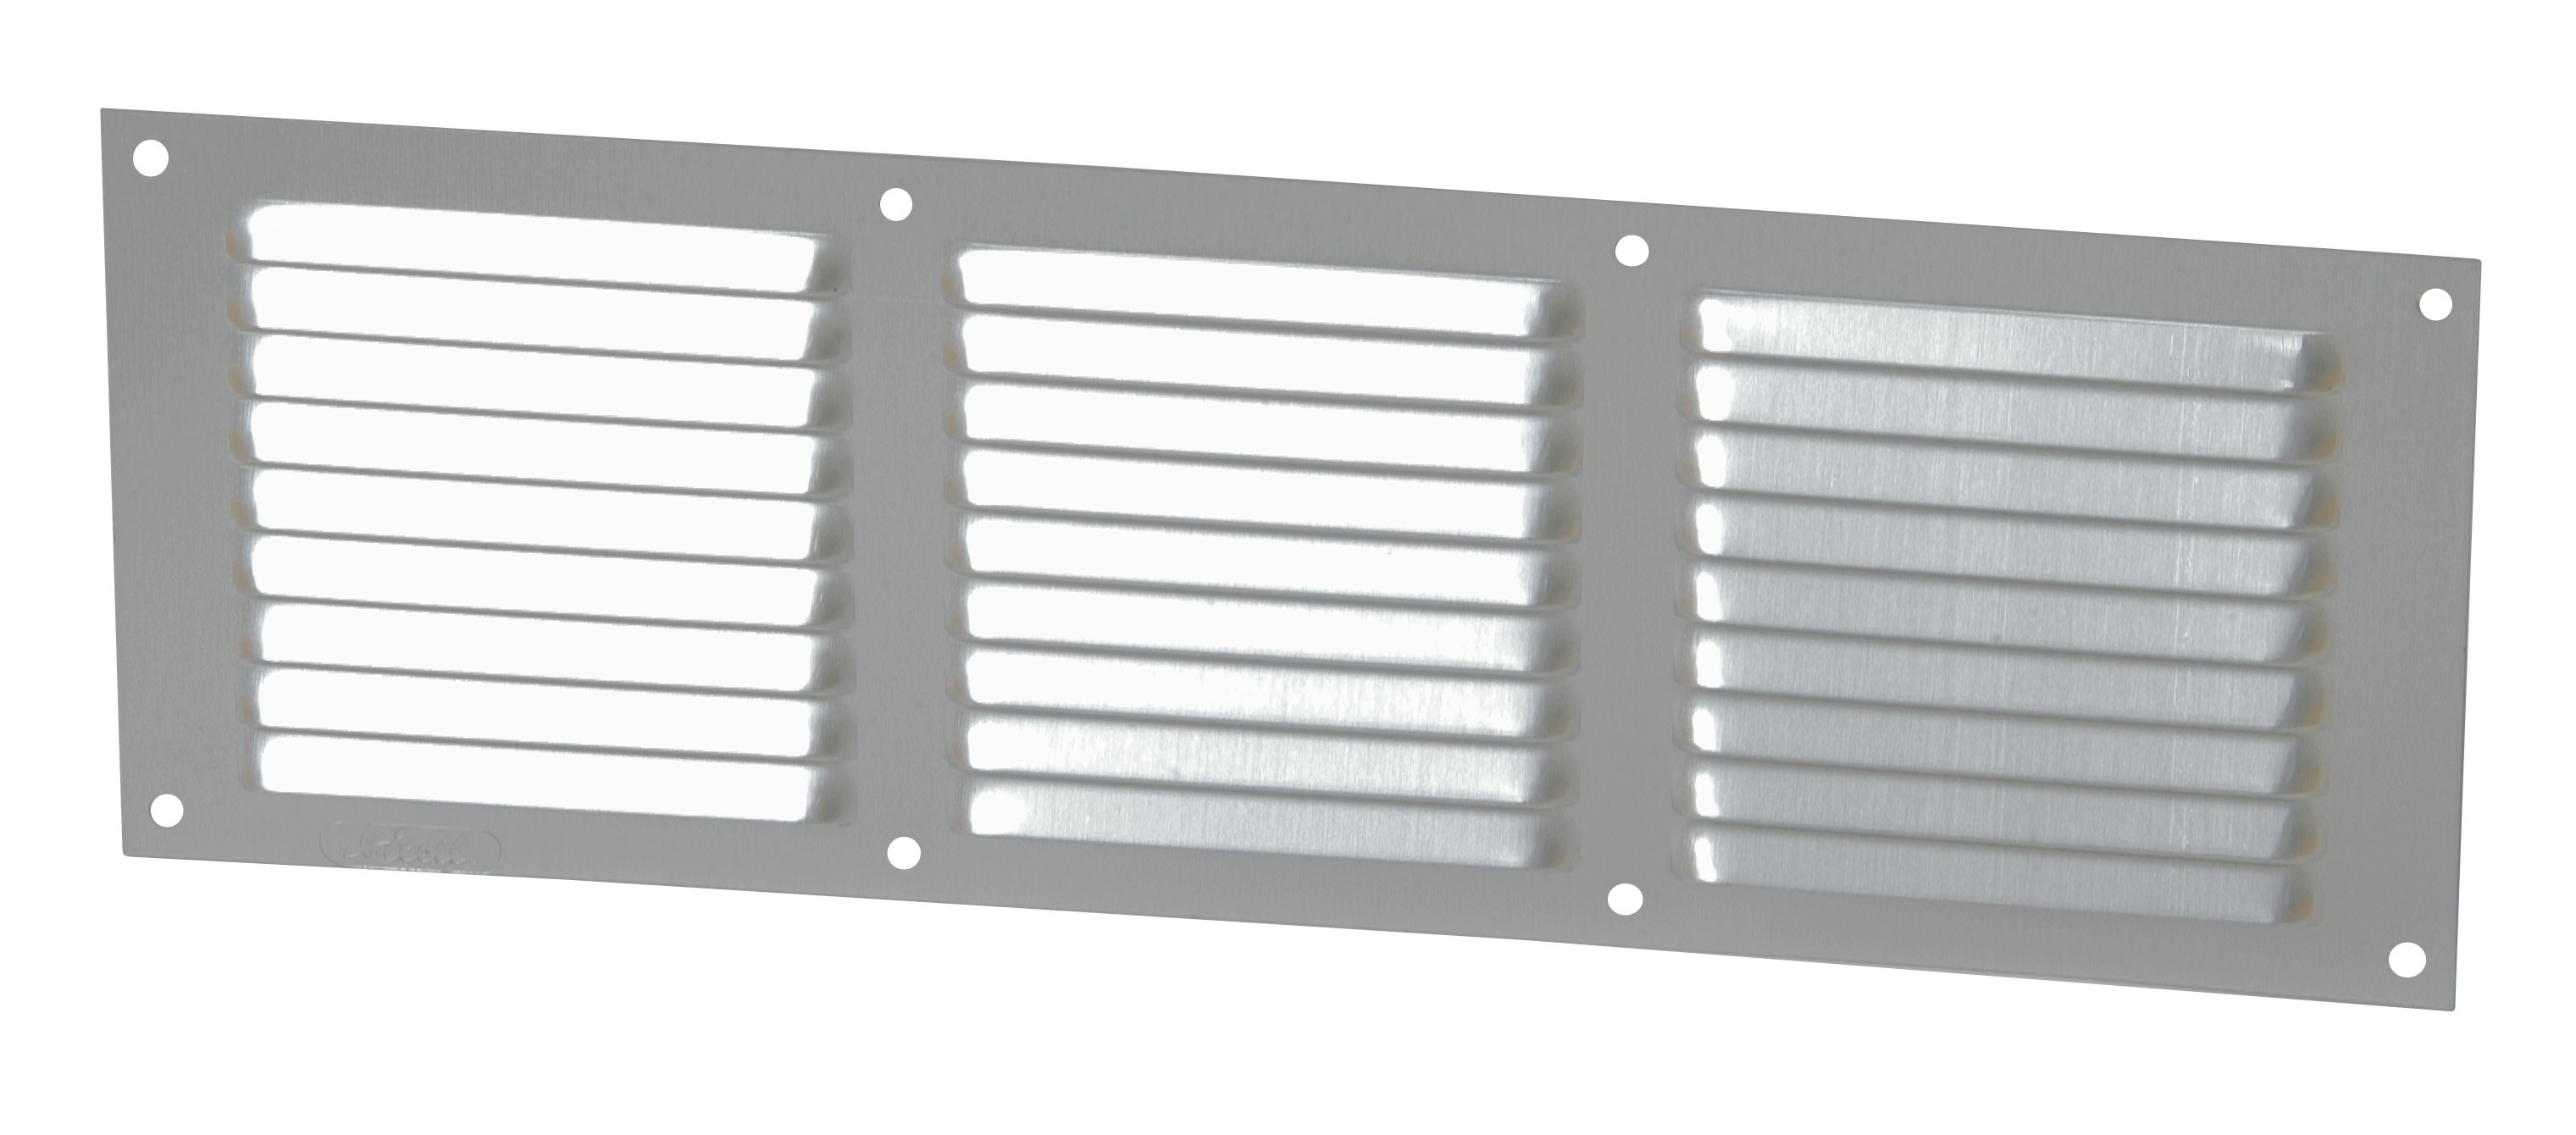 Aluminio anodizado gris con mosquitera: horizontal rectangular 10x30